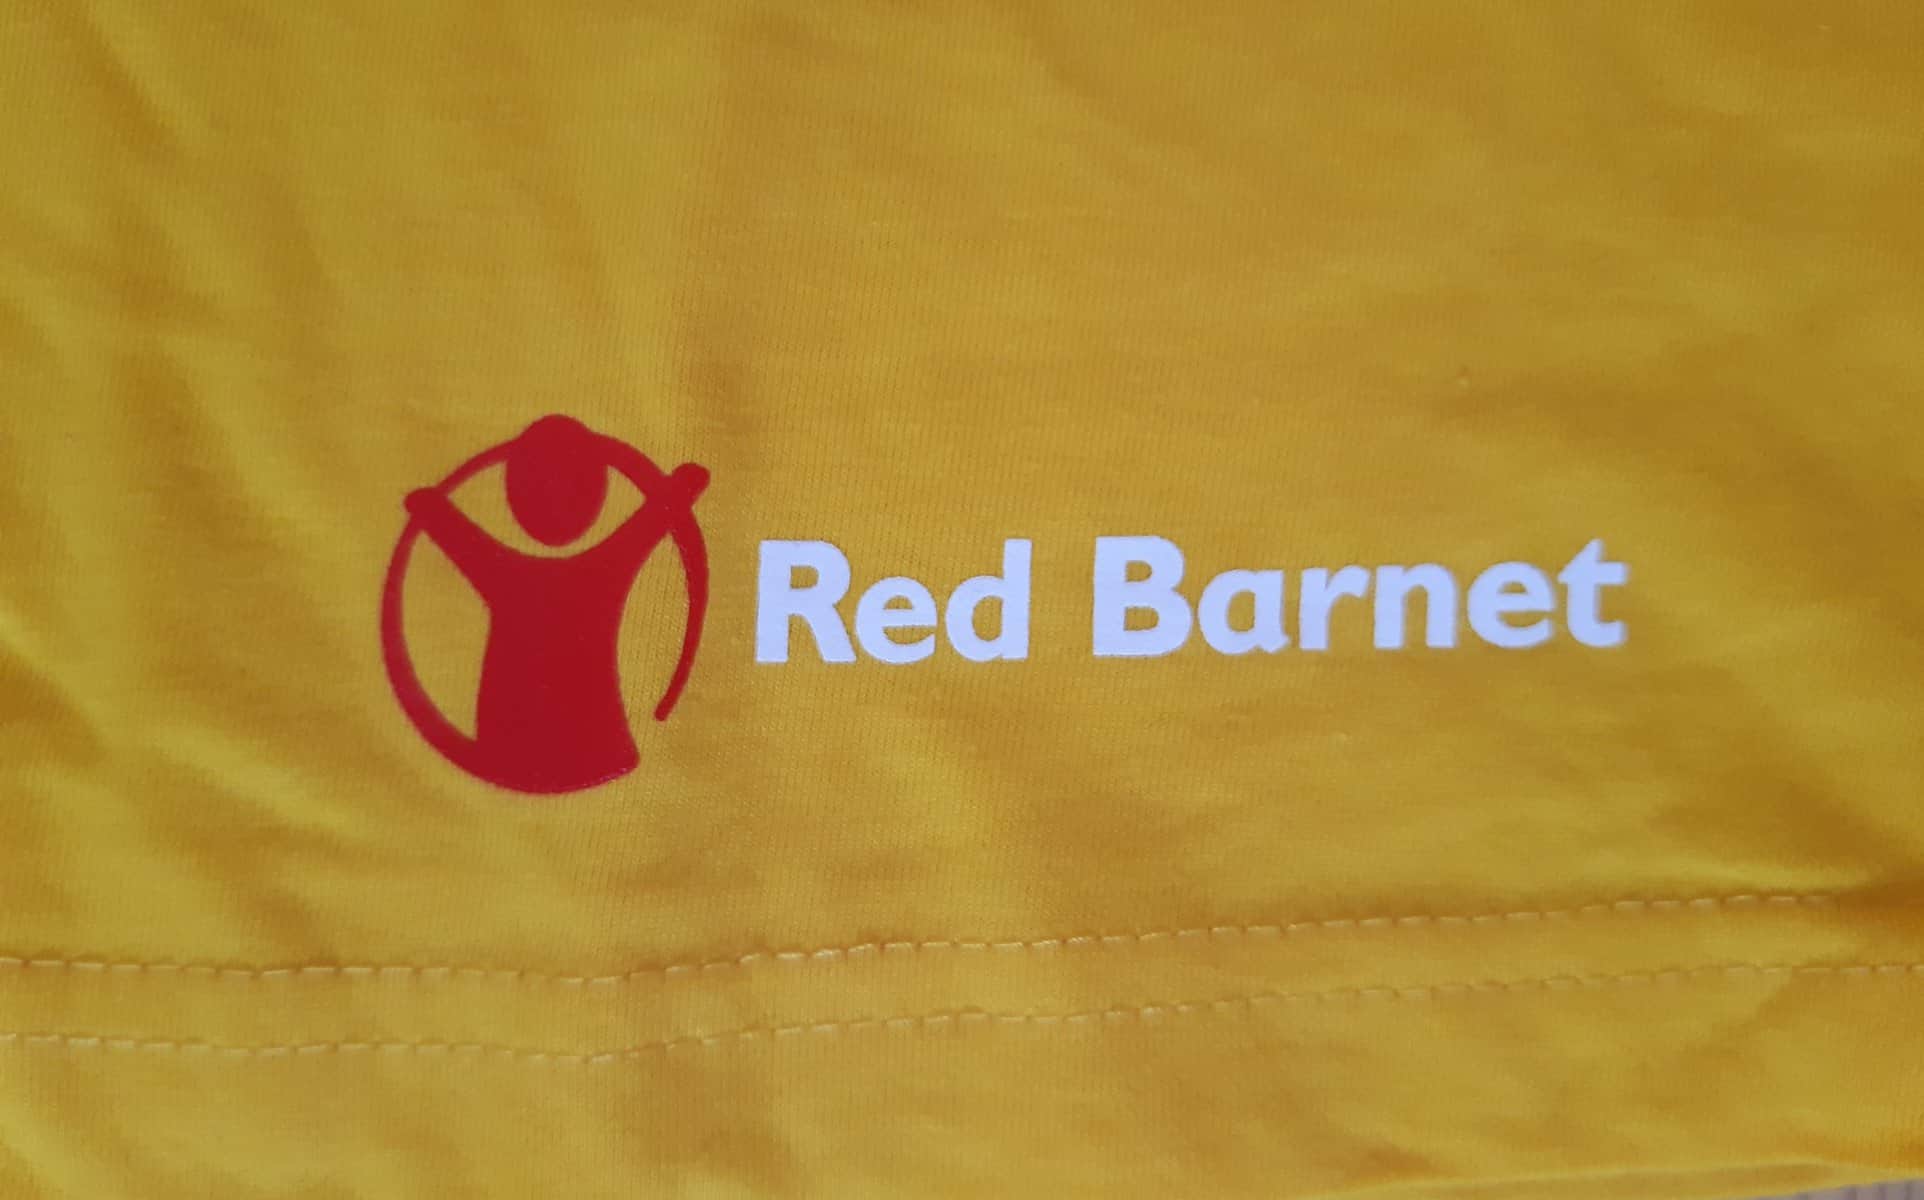 RED BARNET T-SHIRT 2021, CLOSEUP